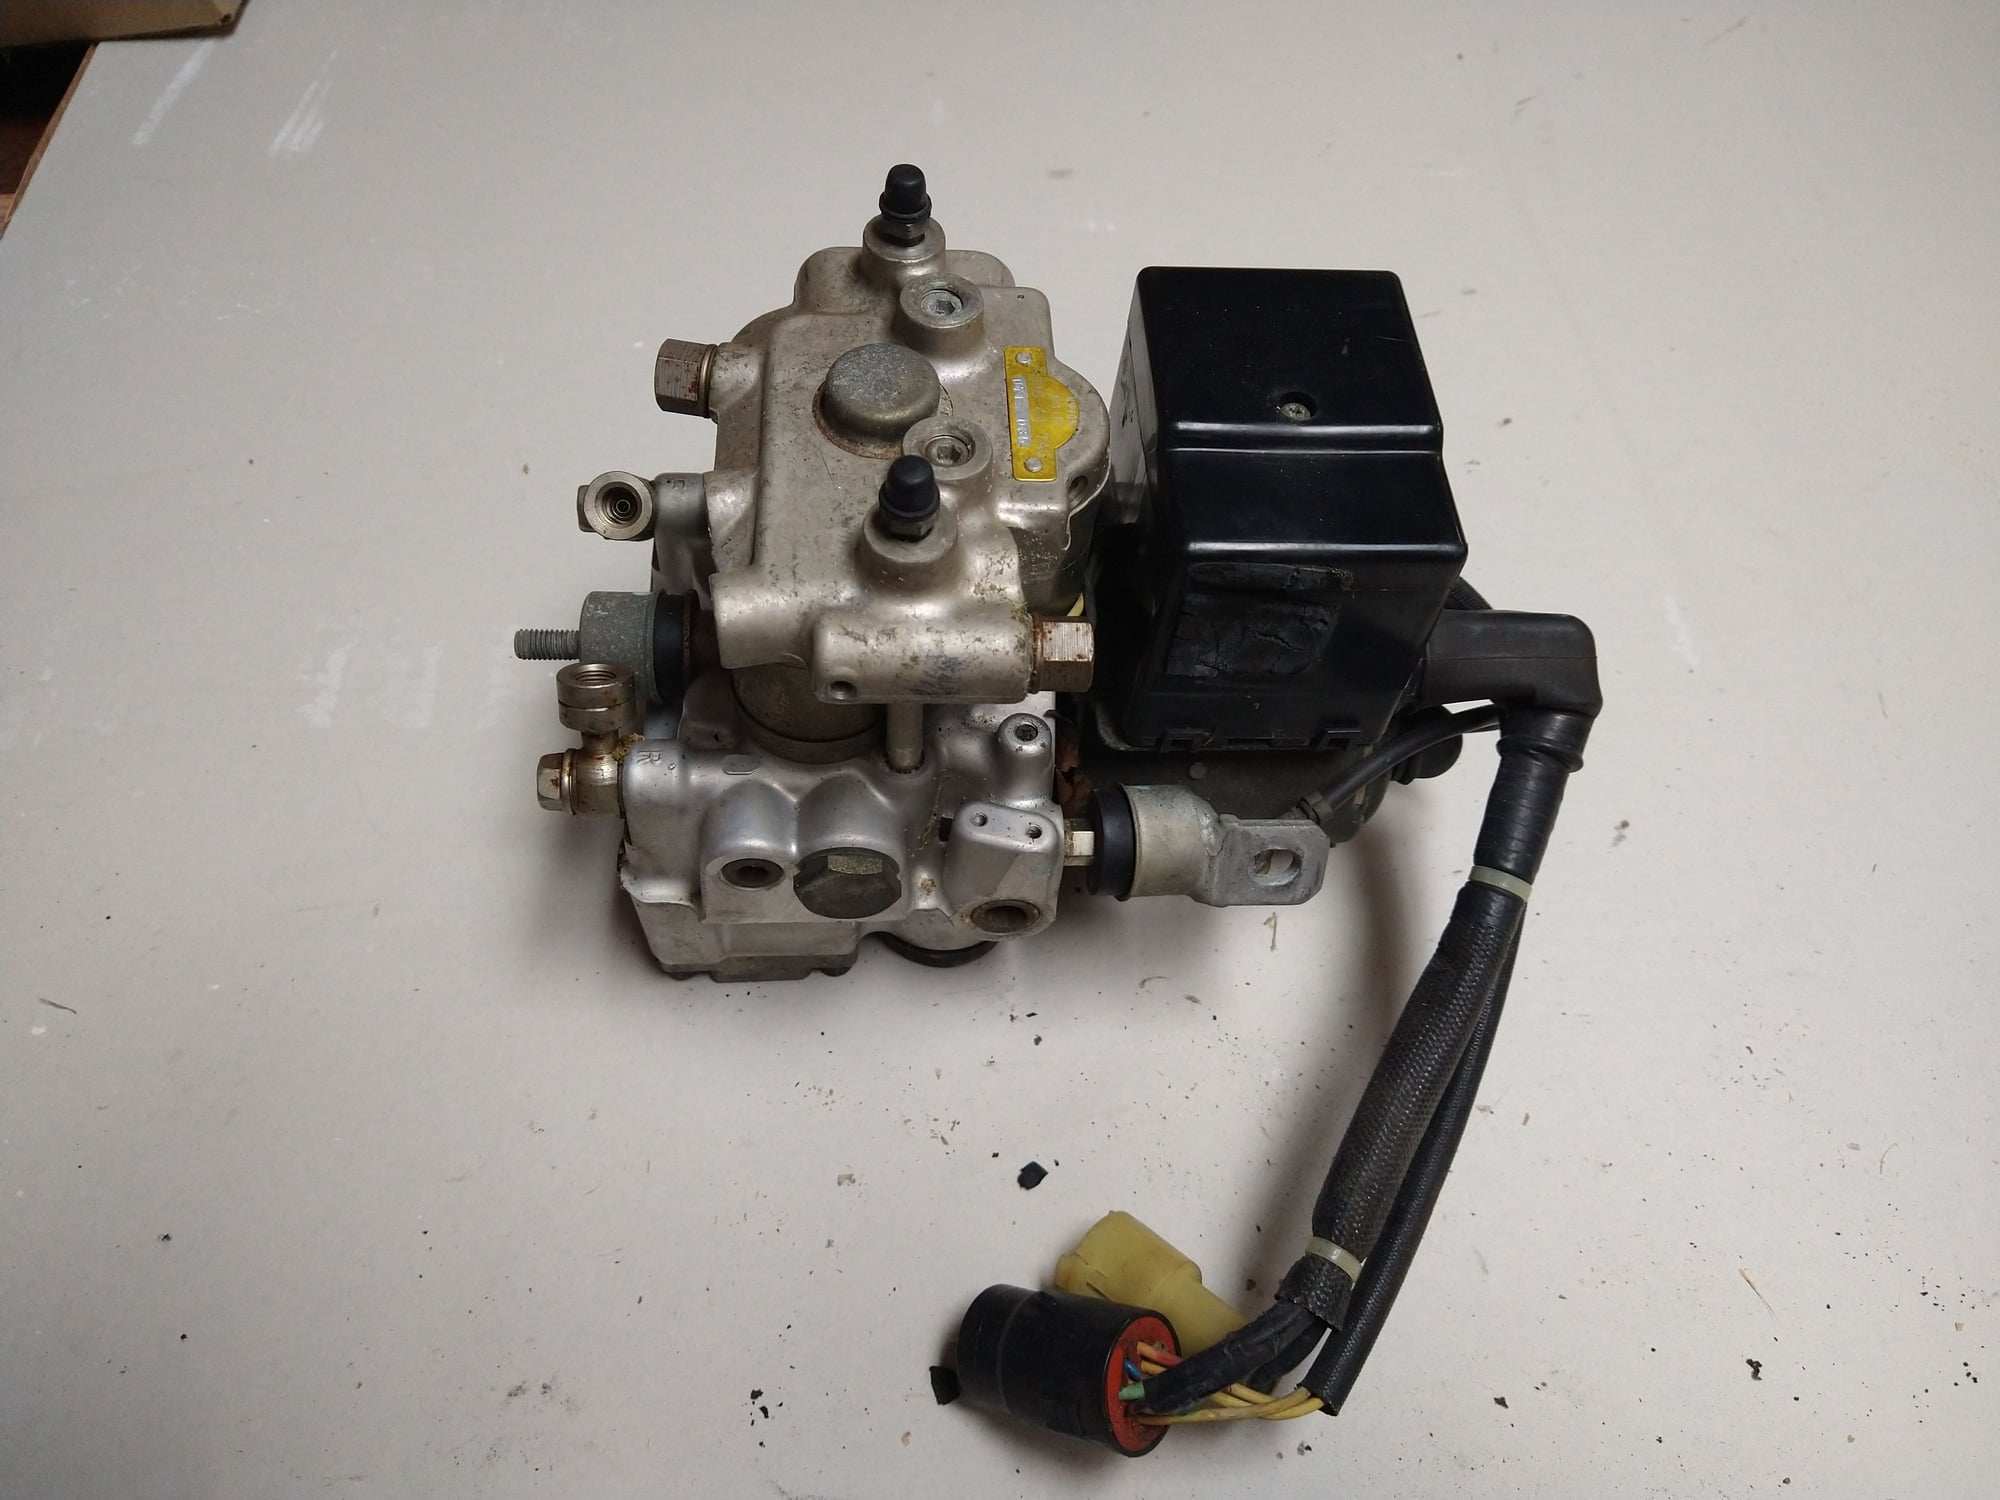 Brakes - S5 ABS Pump - Used - 1988 to 1992 Mazda RX-7 - O Fallon, MO 63368, United States